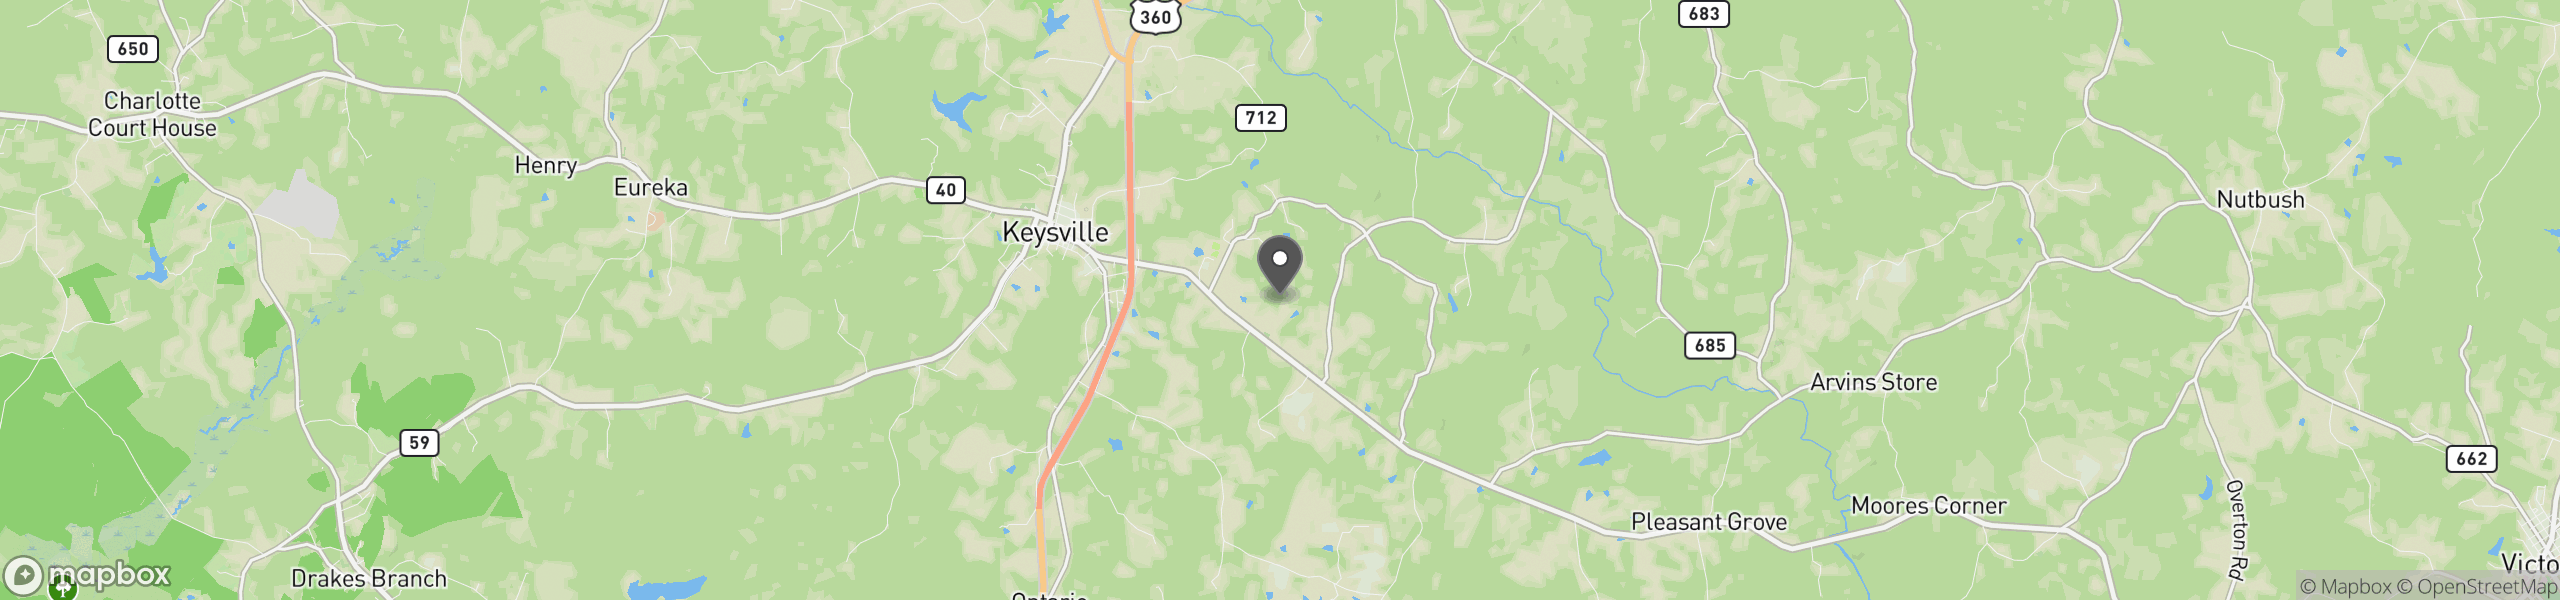 Keysville, VA 23947